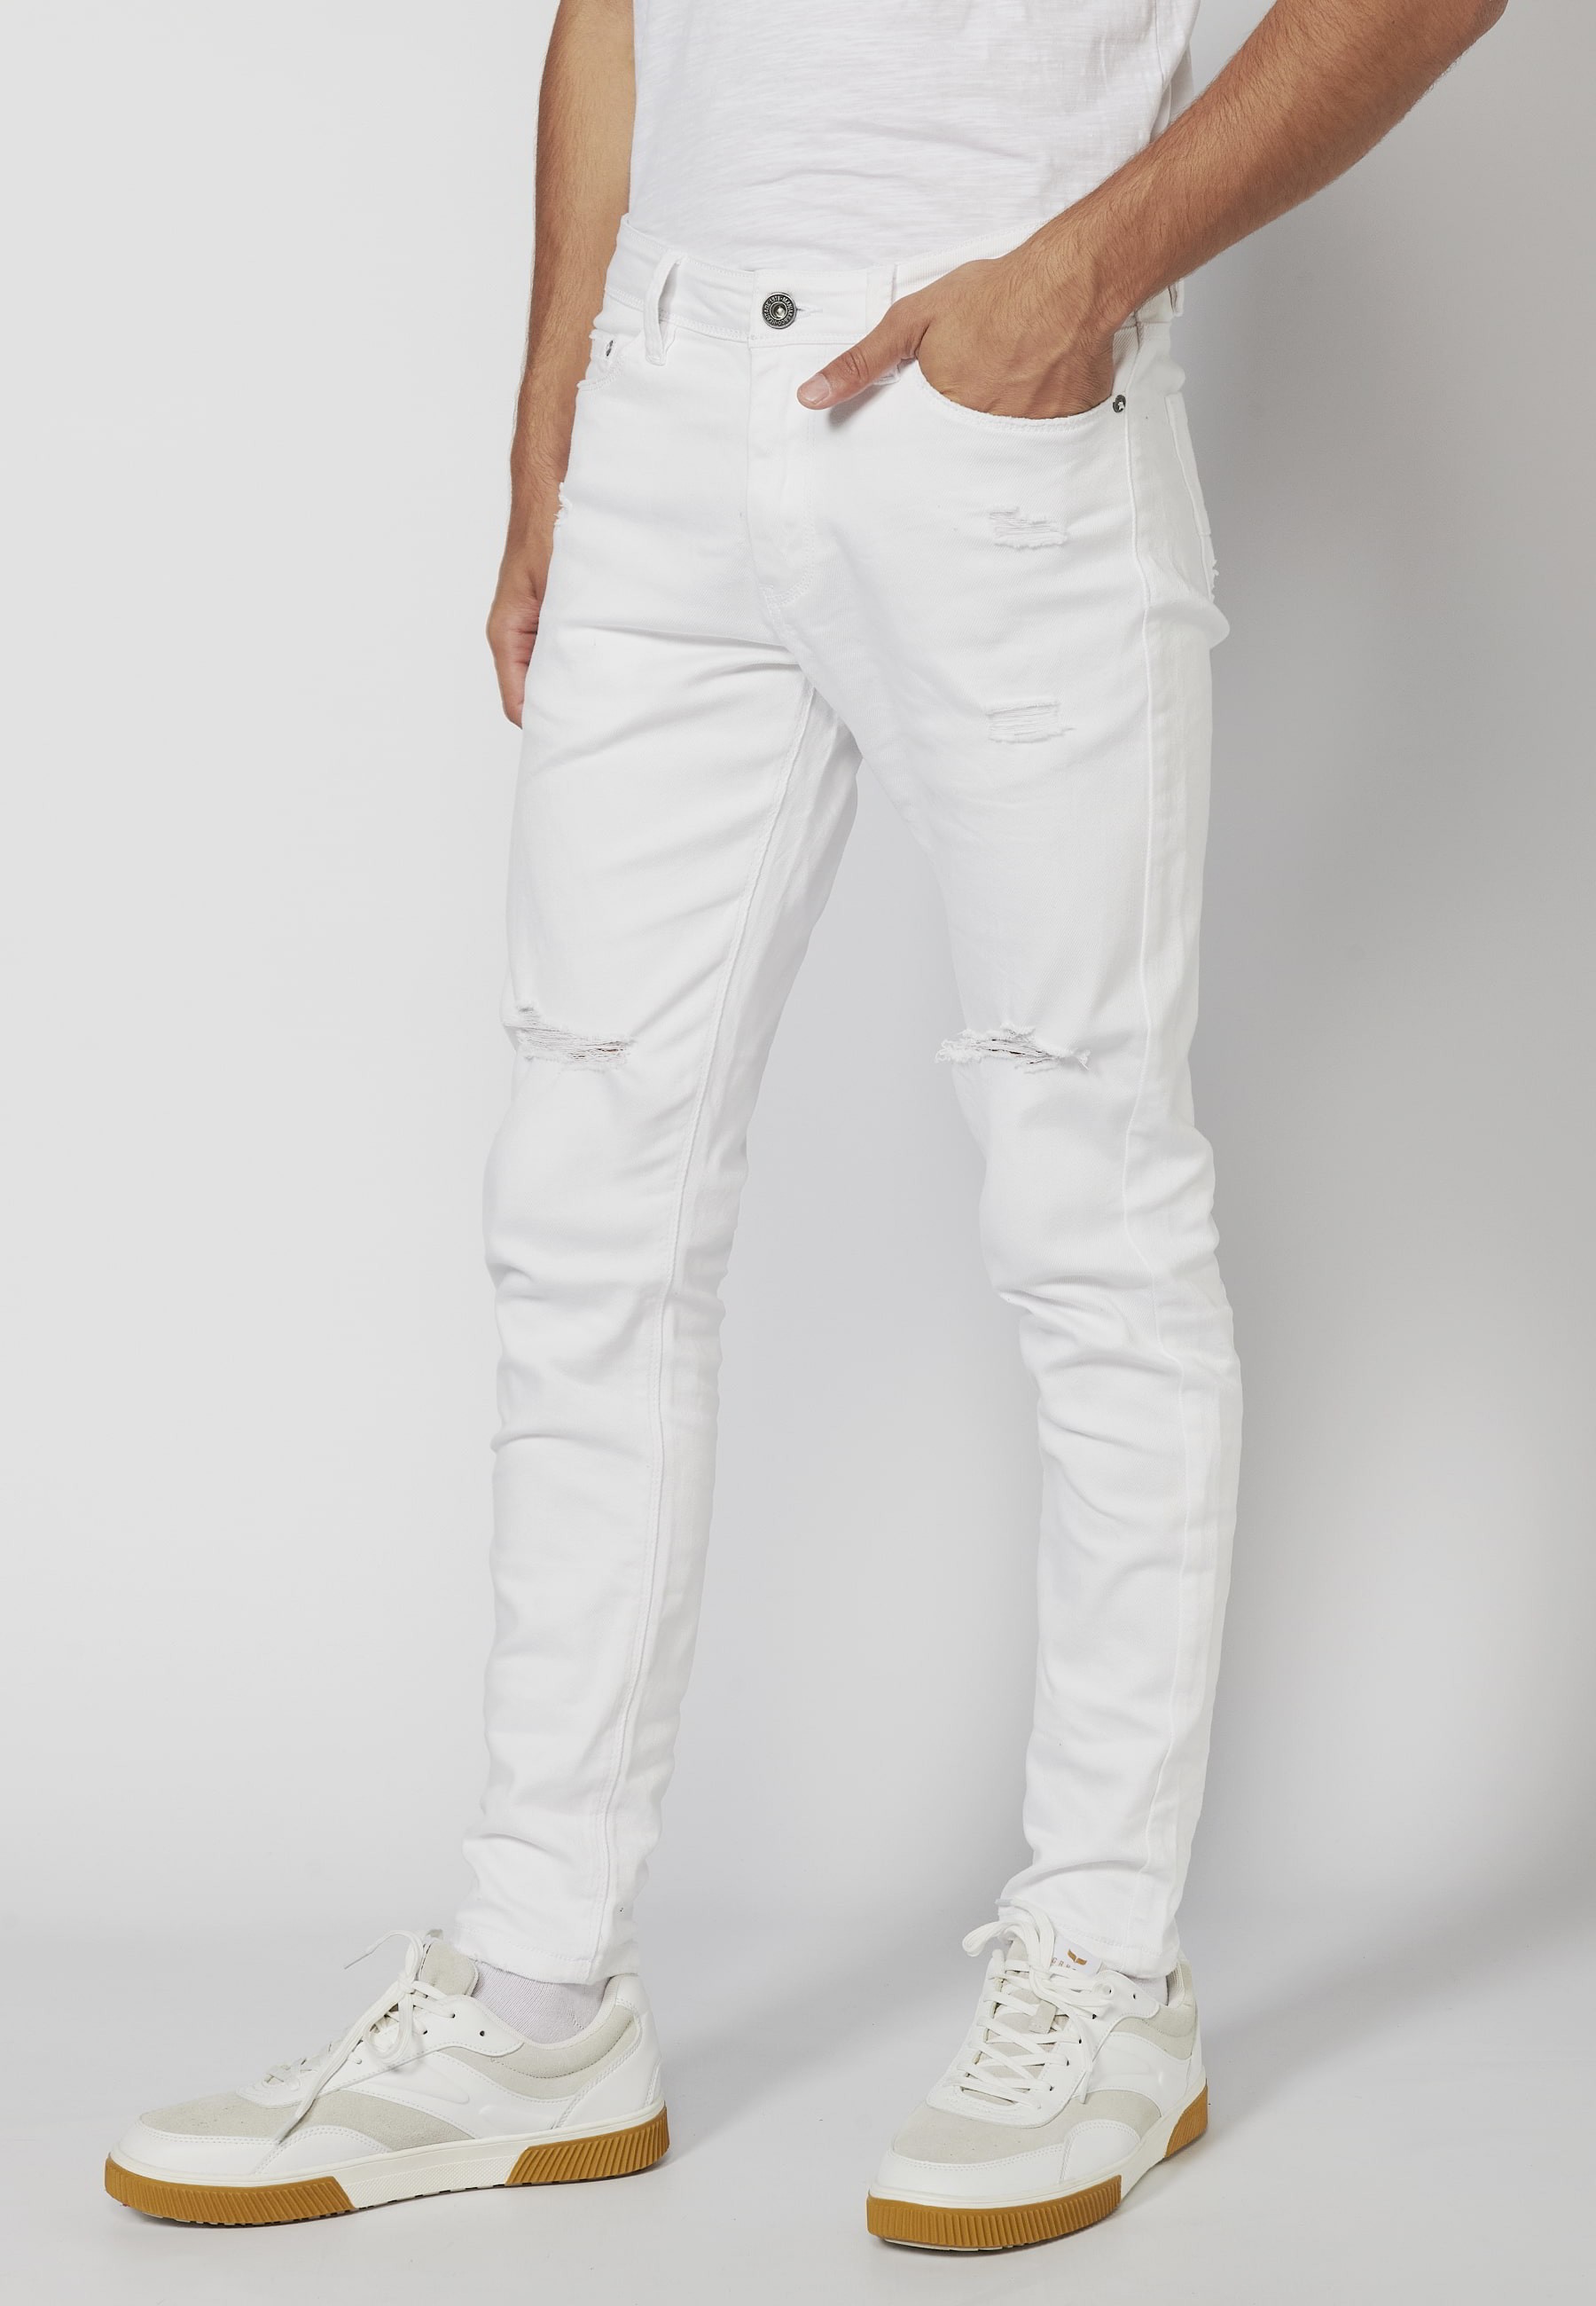 Pantalón largo super skinny detalles rotos color Blanco para Hombre 2